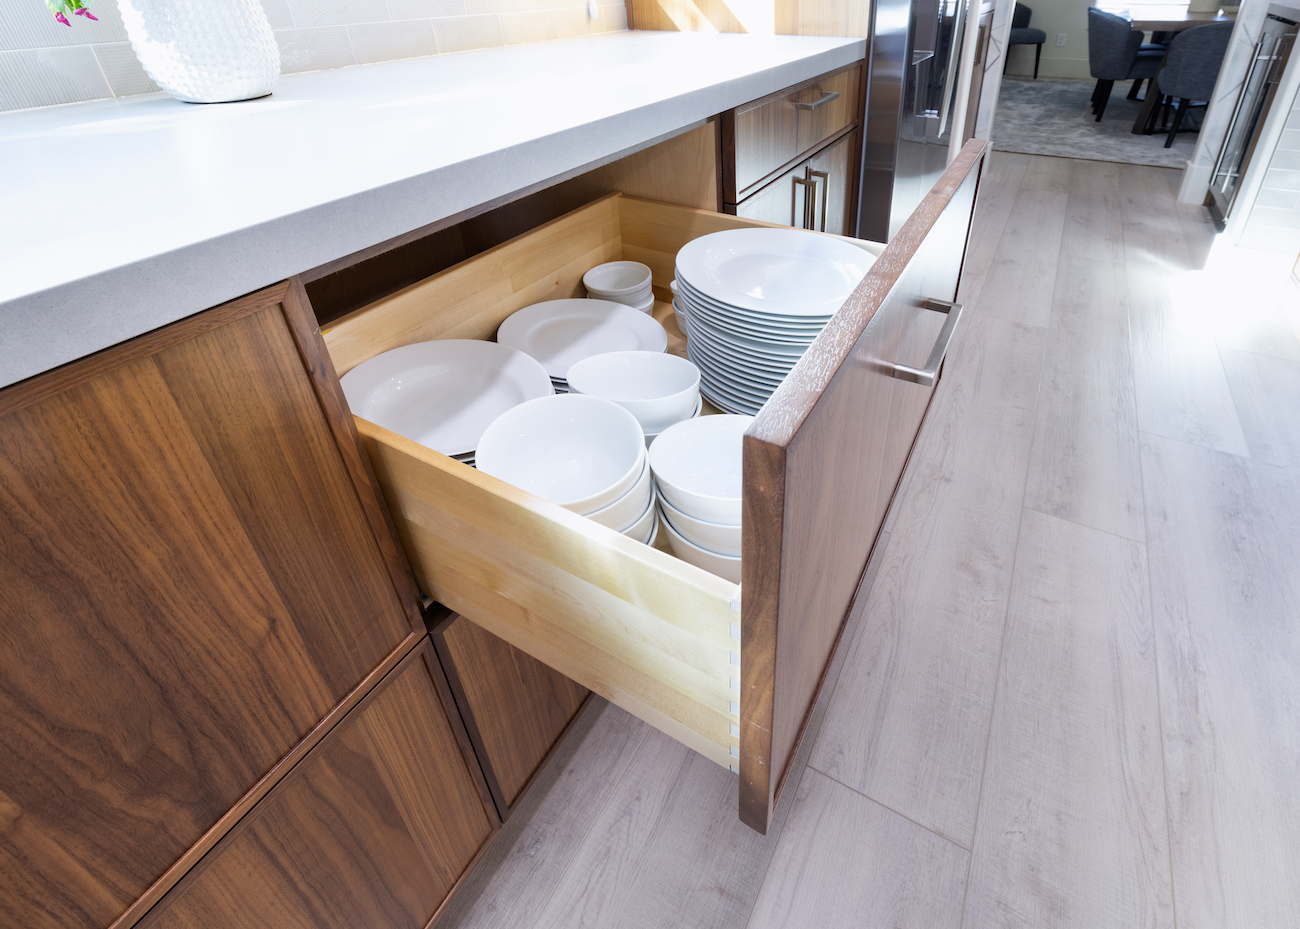 bowls-plates-storage-kitchen-design-lodi-ca